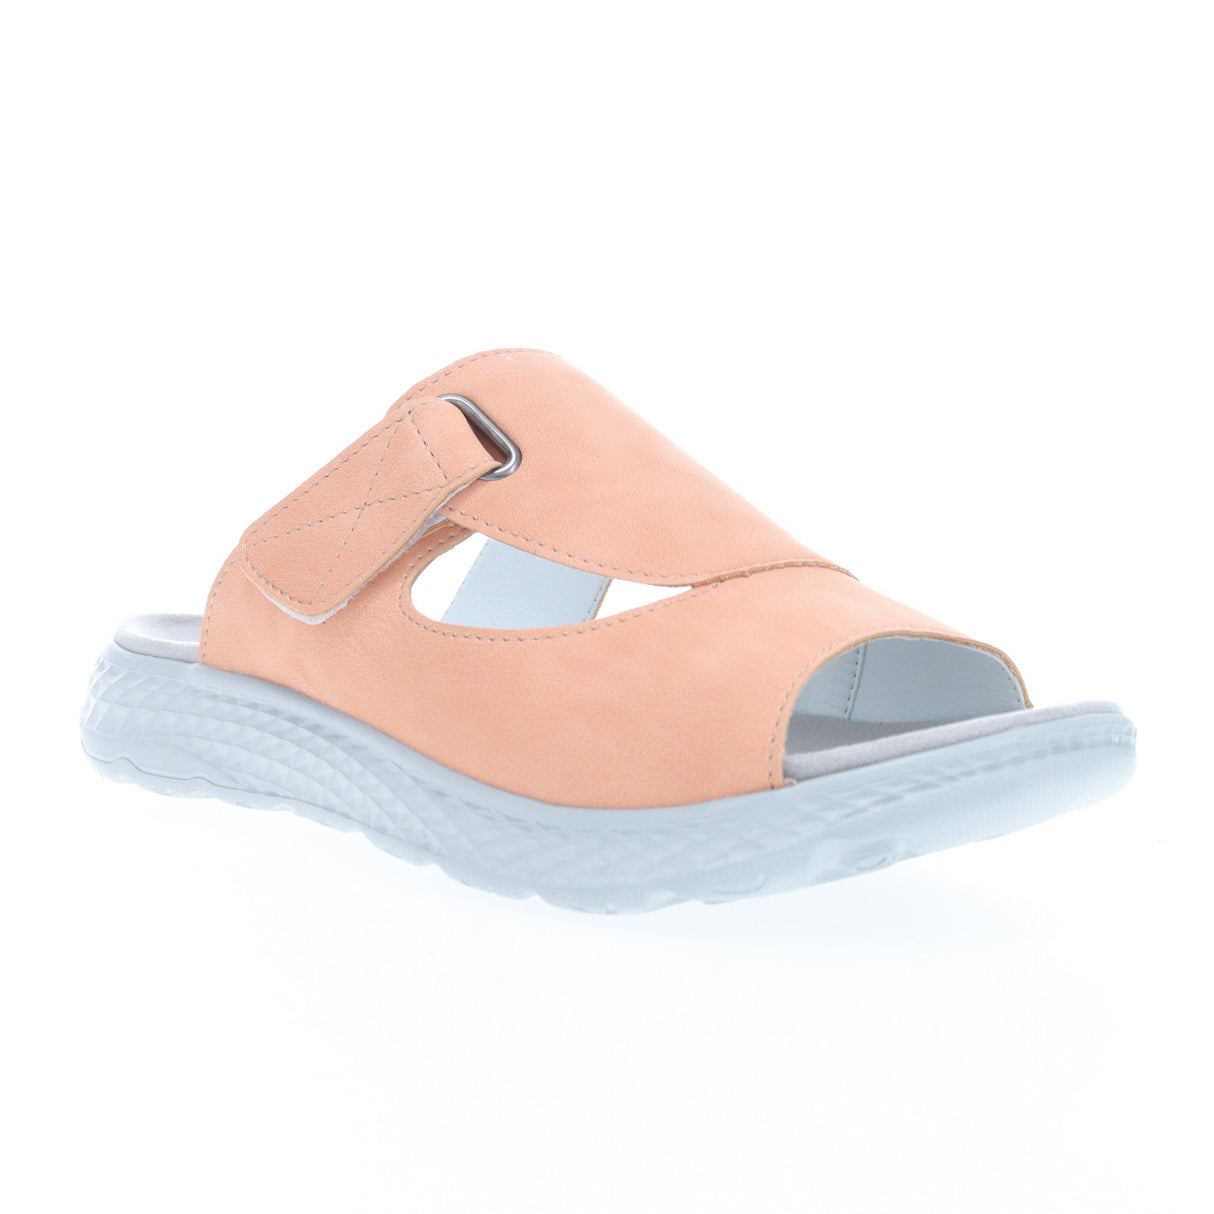 Propet TravelActiv Sedona Slide Sandal (Women) - Apricot Sandals - Slide - The Heel Shoe Fitters